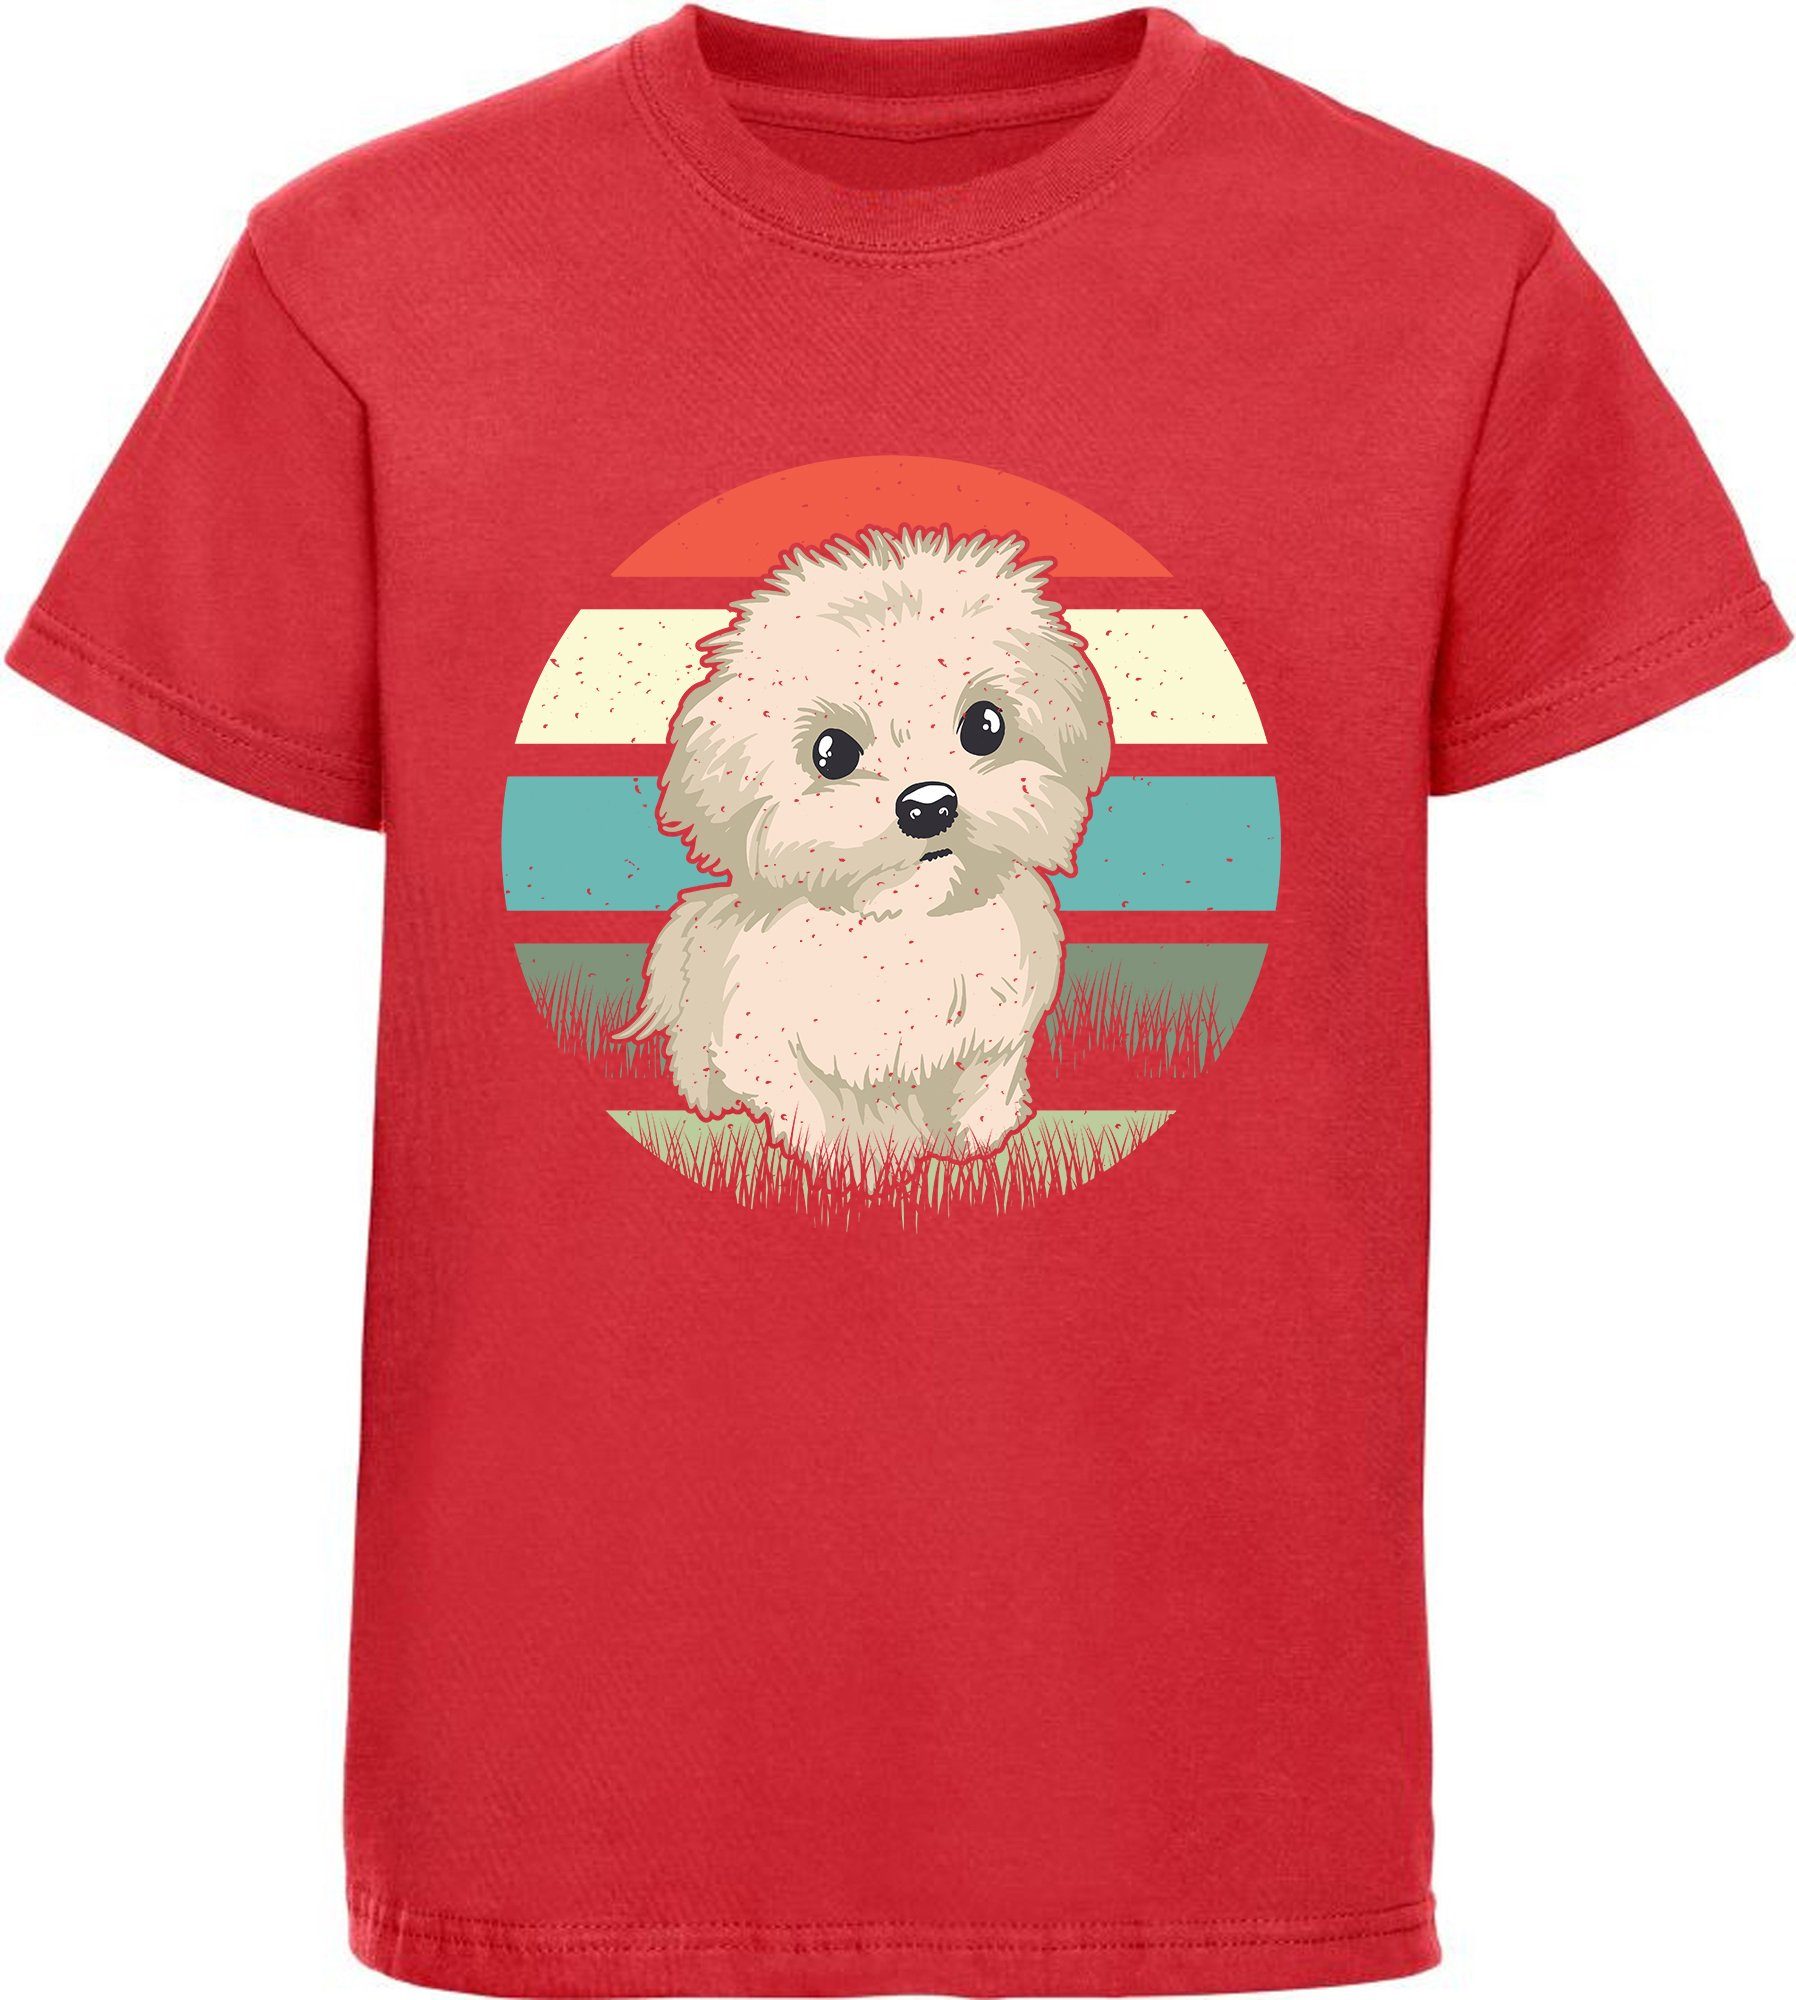 MyDesign24 Print-Shirt Kinder Hunde T-Shirt i242 Baumwollshirt rot Retro bedruckt mit Malteser Welpen Aufdruck, 